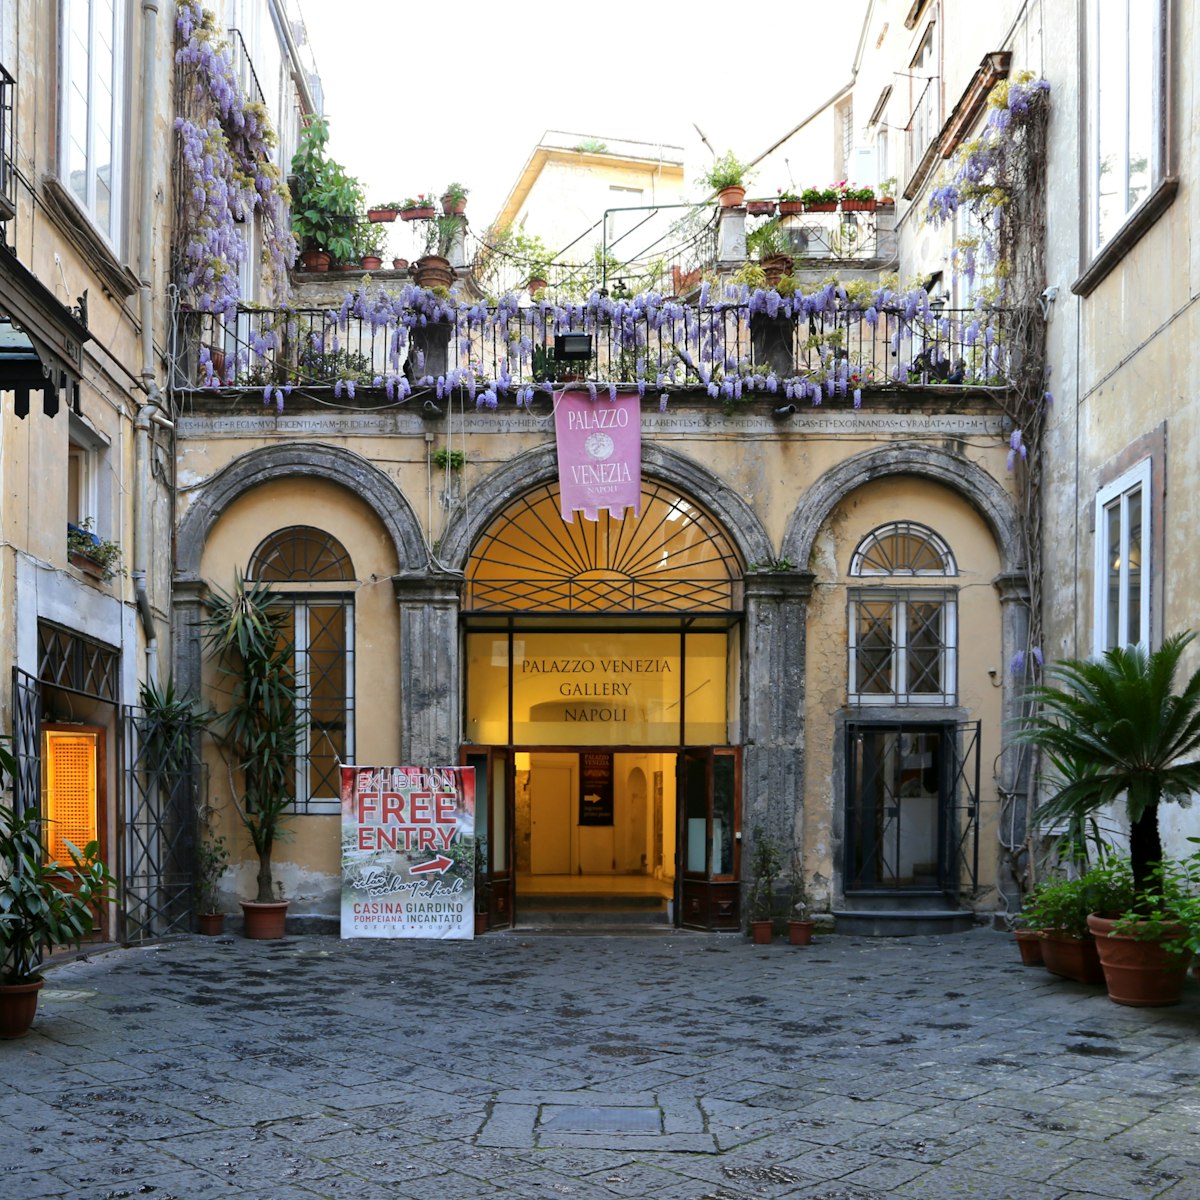 The Palazzo Venezia's history dates back to the 15th century.

IMAGE SOURCE: https://commons.wikimedia.org/wiki/File:Napoli,_palazzo_venezia,_cortile_01.jpg